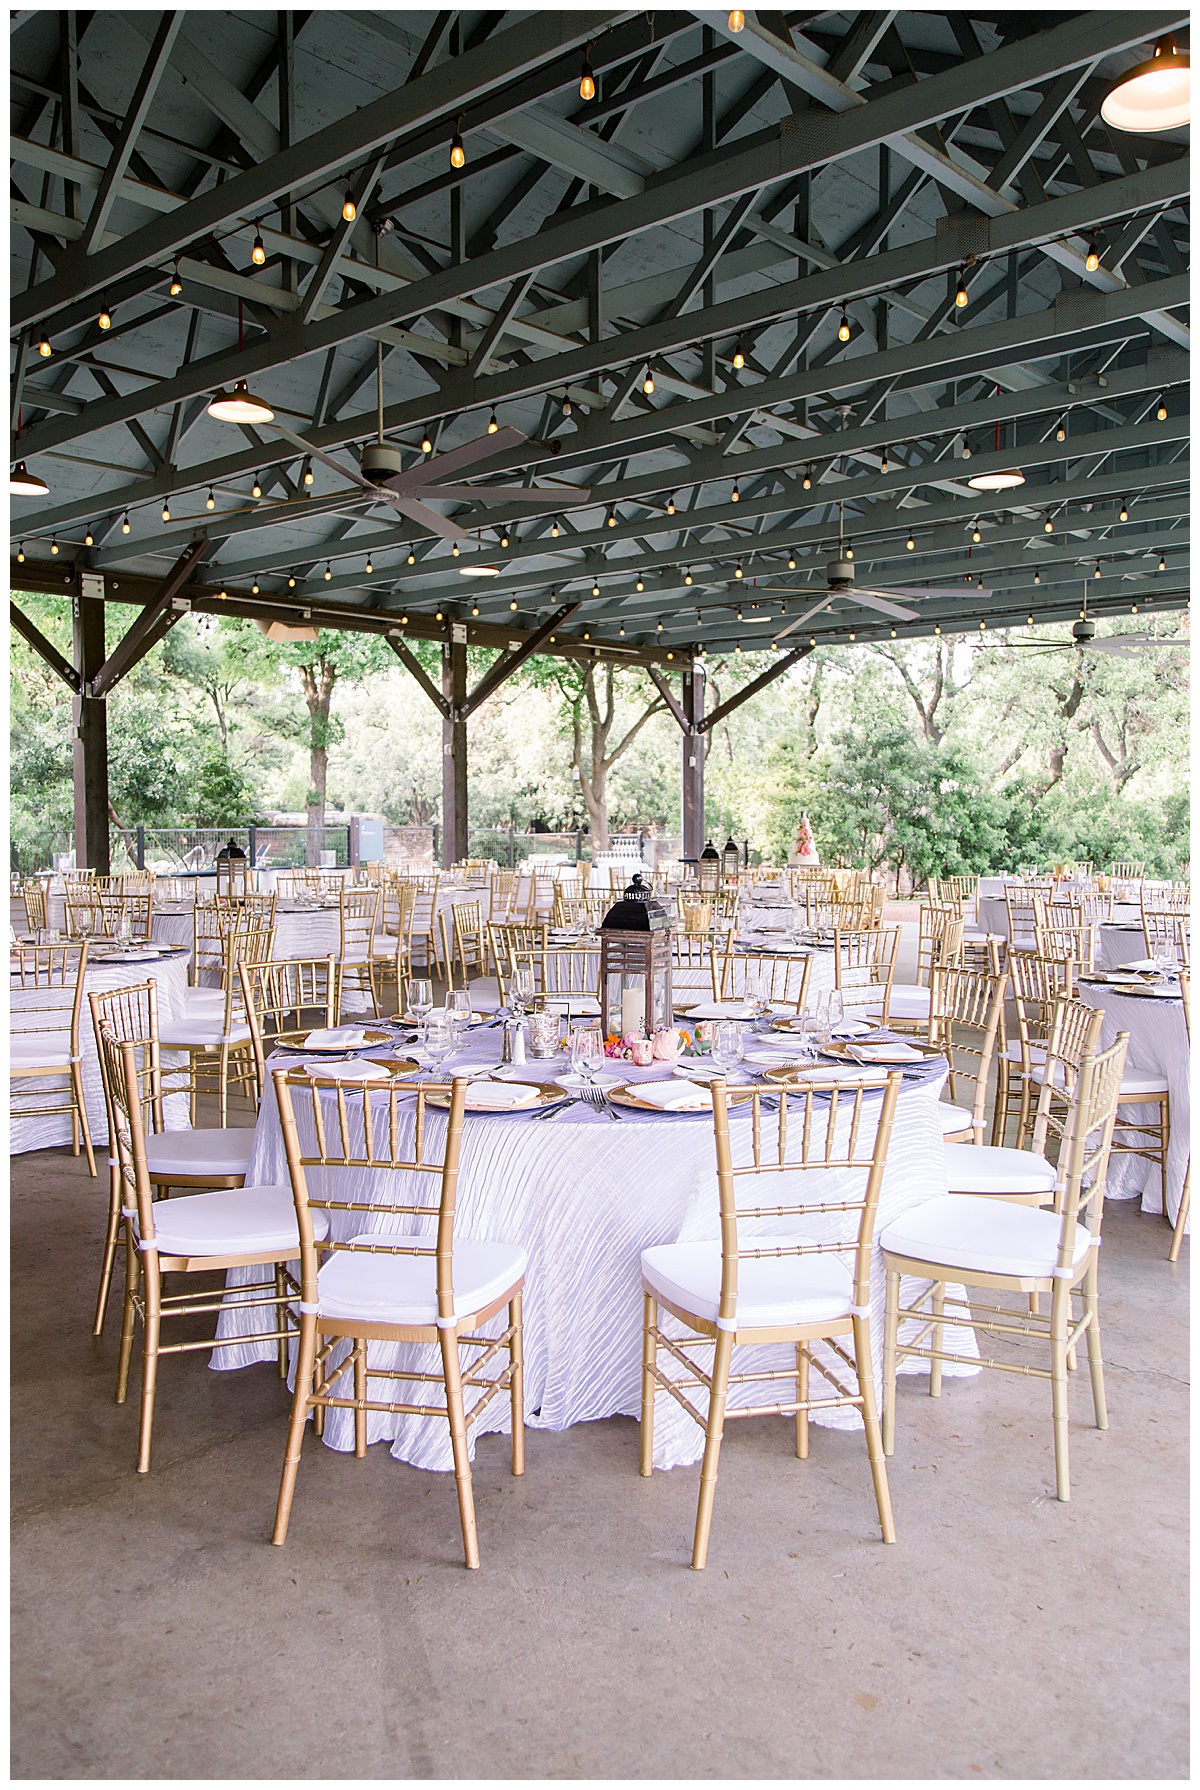 Wedding reception white tables and gold chairs at Hyatt Regency Hill Country Resort Wedding in San Antonio, TX | San Antonio Wedding photographer| Destination Wedding Photographer| Monica Roberts Photography | monicaroberts.com